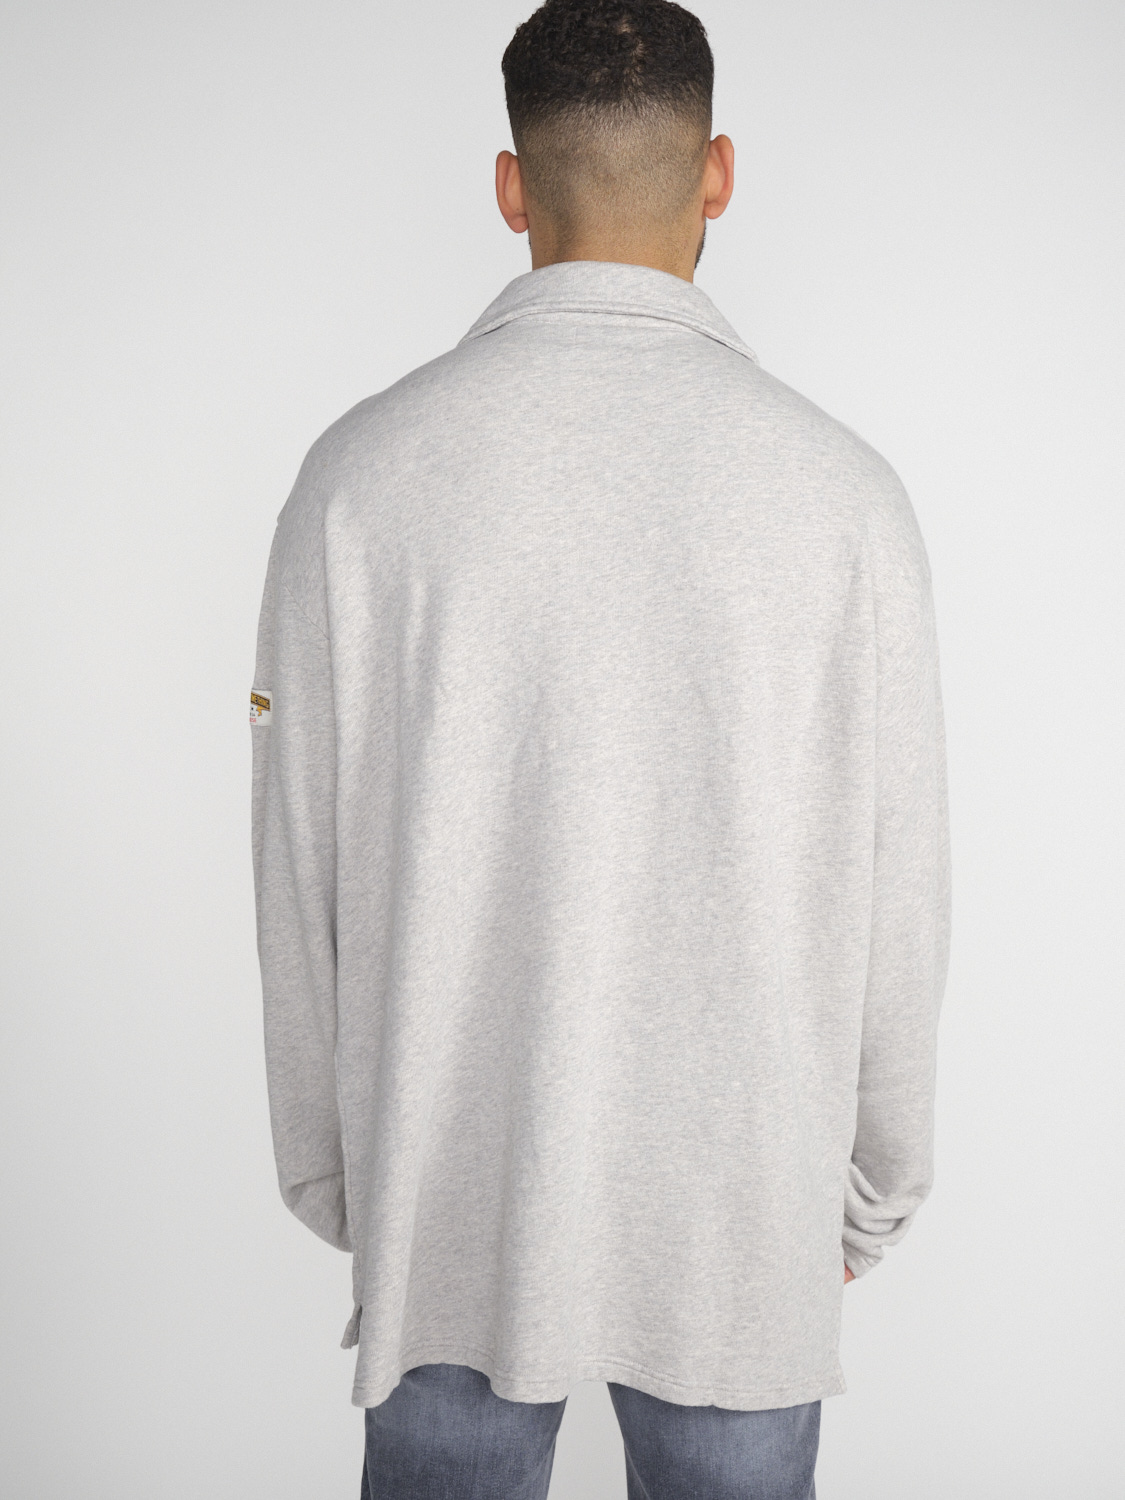 Martine Rose Zip Up – Oversized Sweatshirt with Zipper   grey M